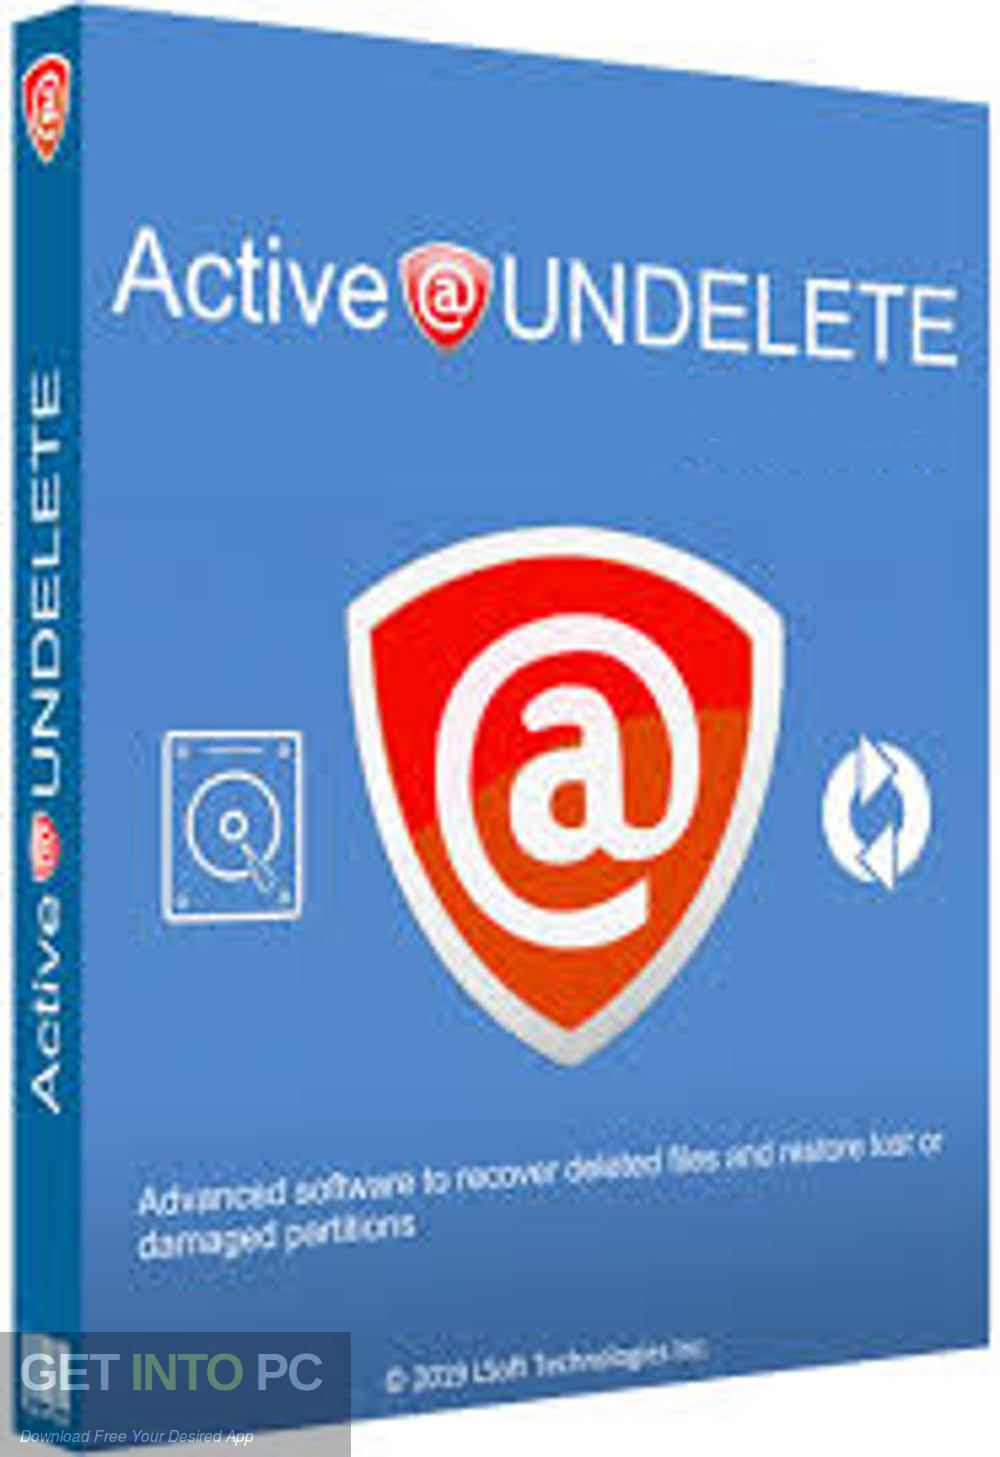 Active UNDELETE Ultimate Free Download GetintoPC.com